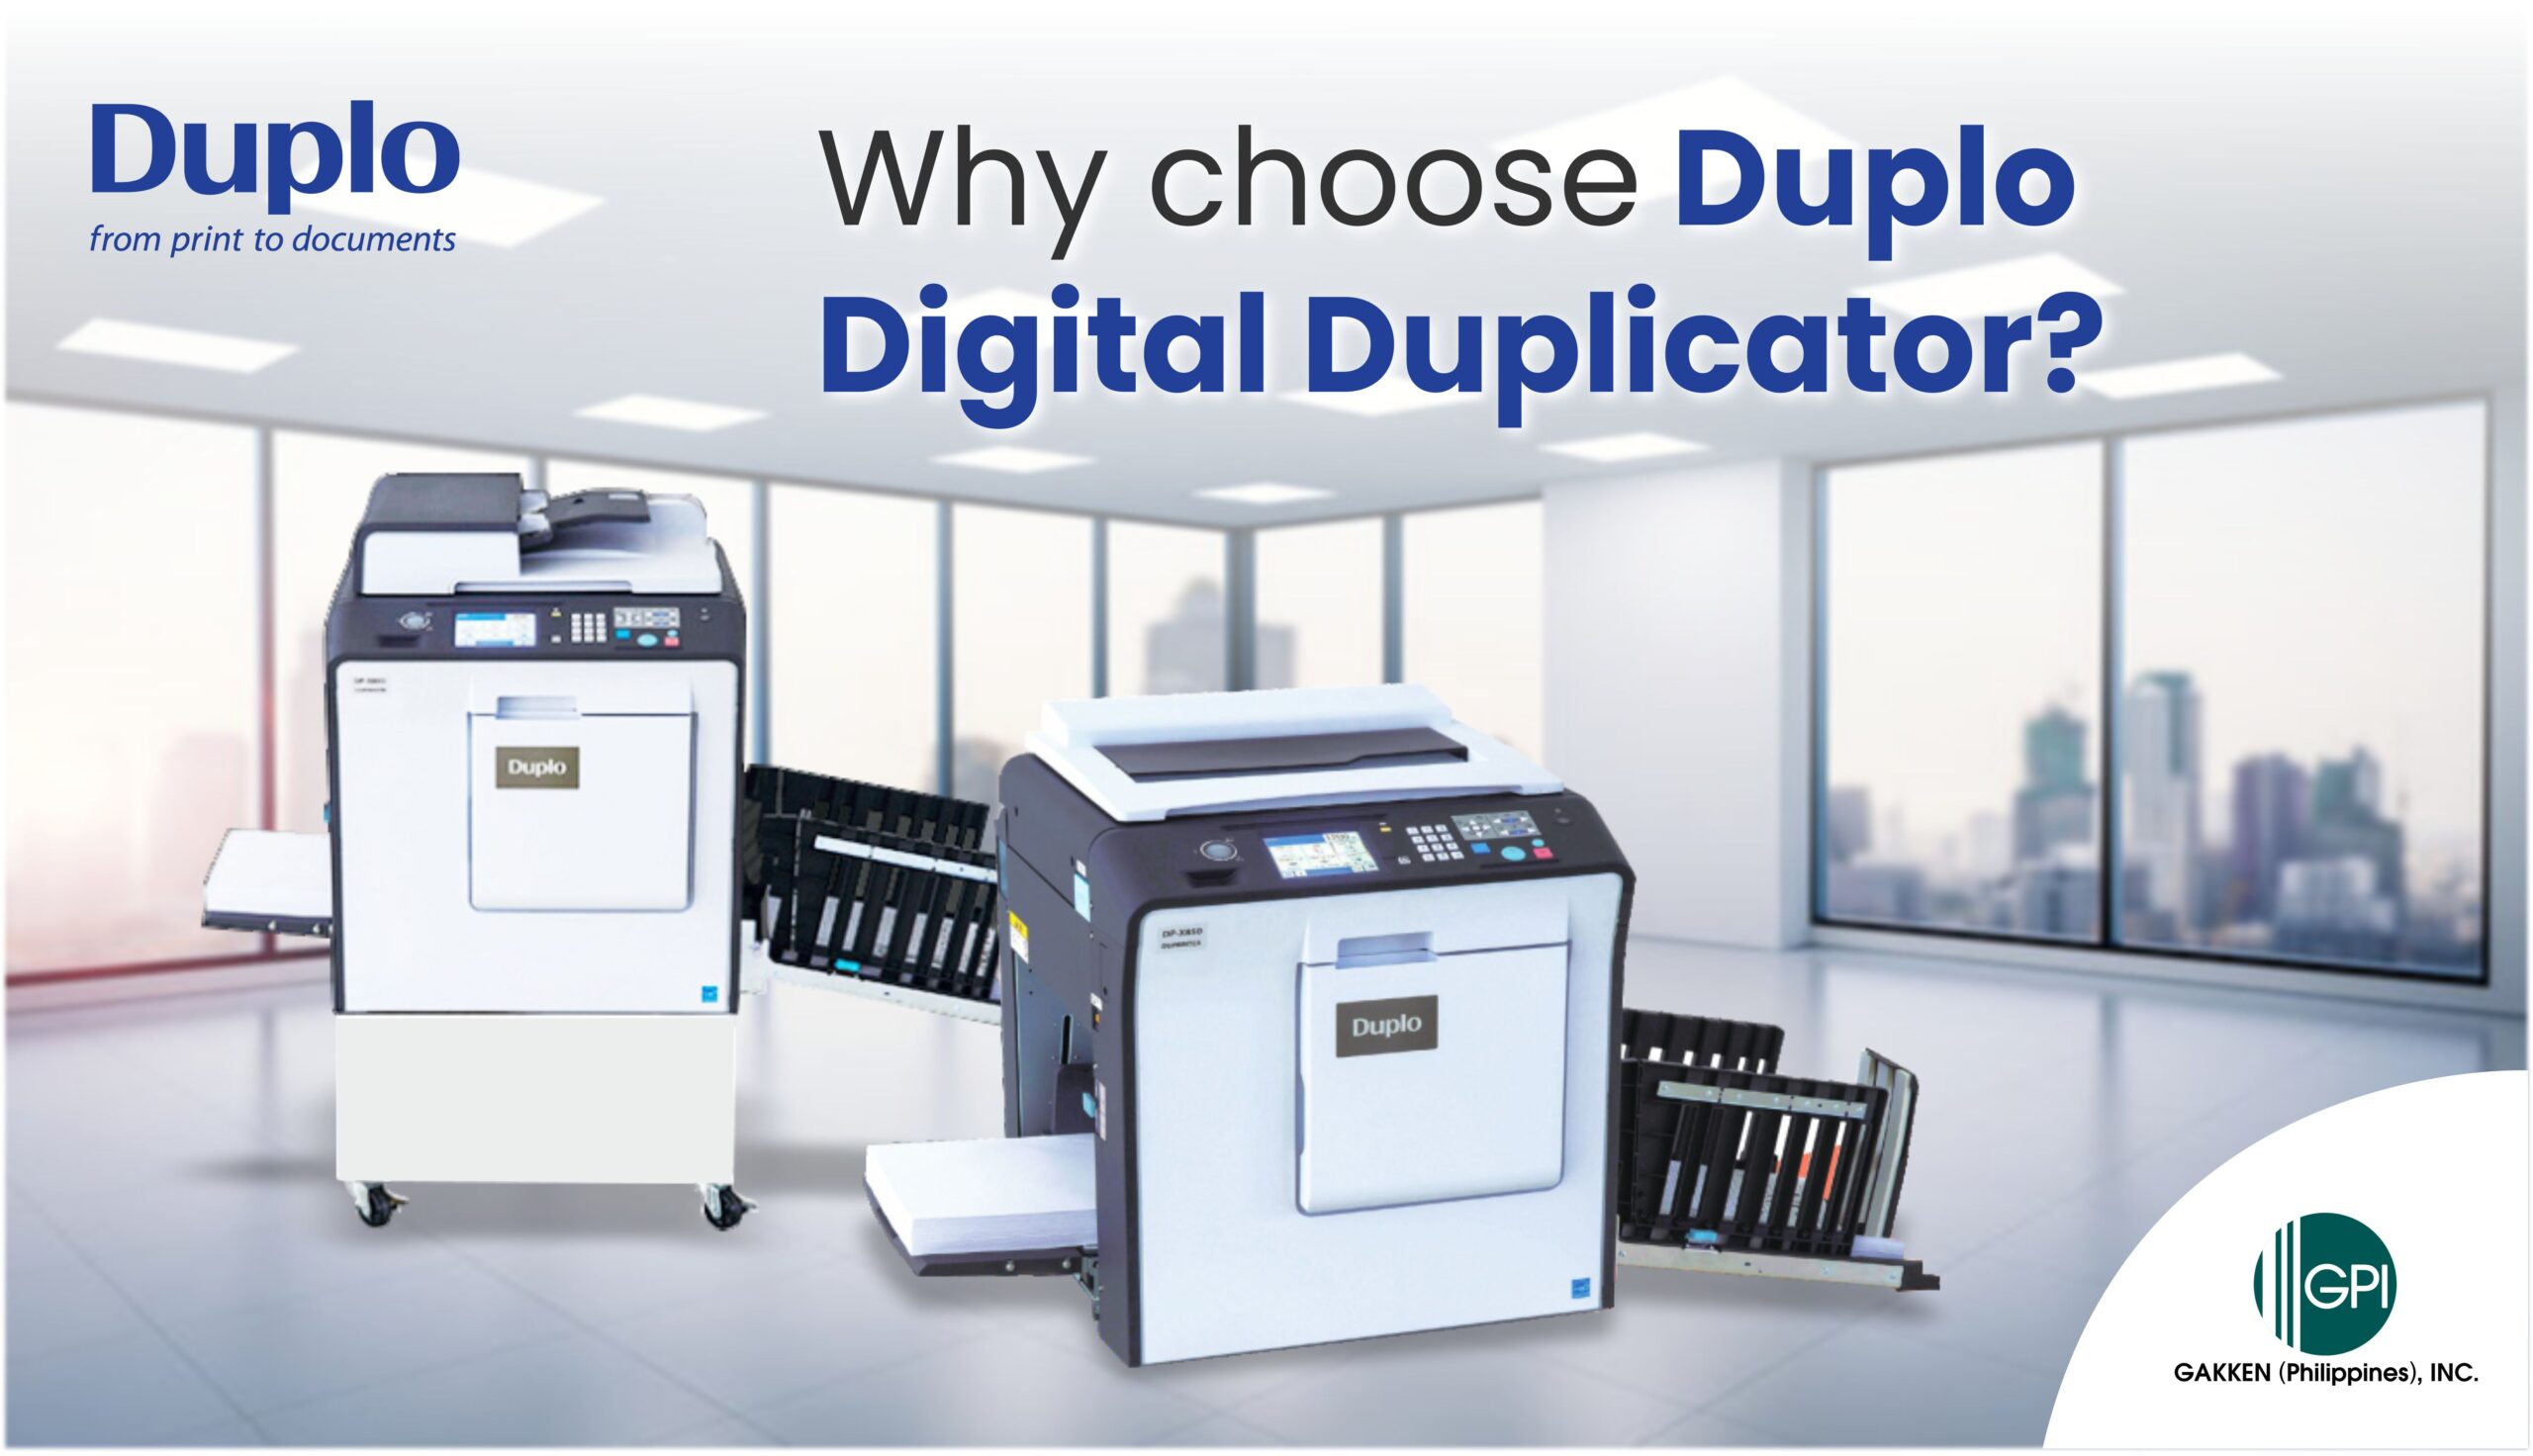 Why choose Duplo Digital Duplicator?